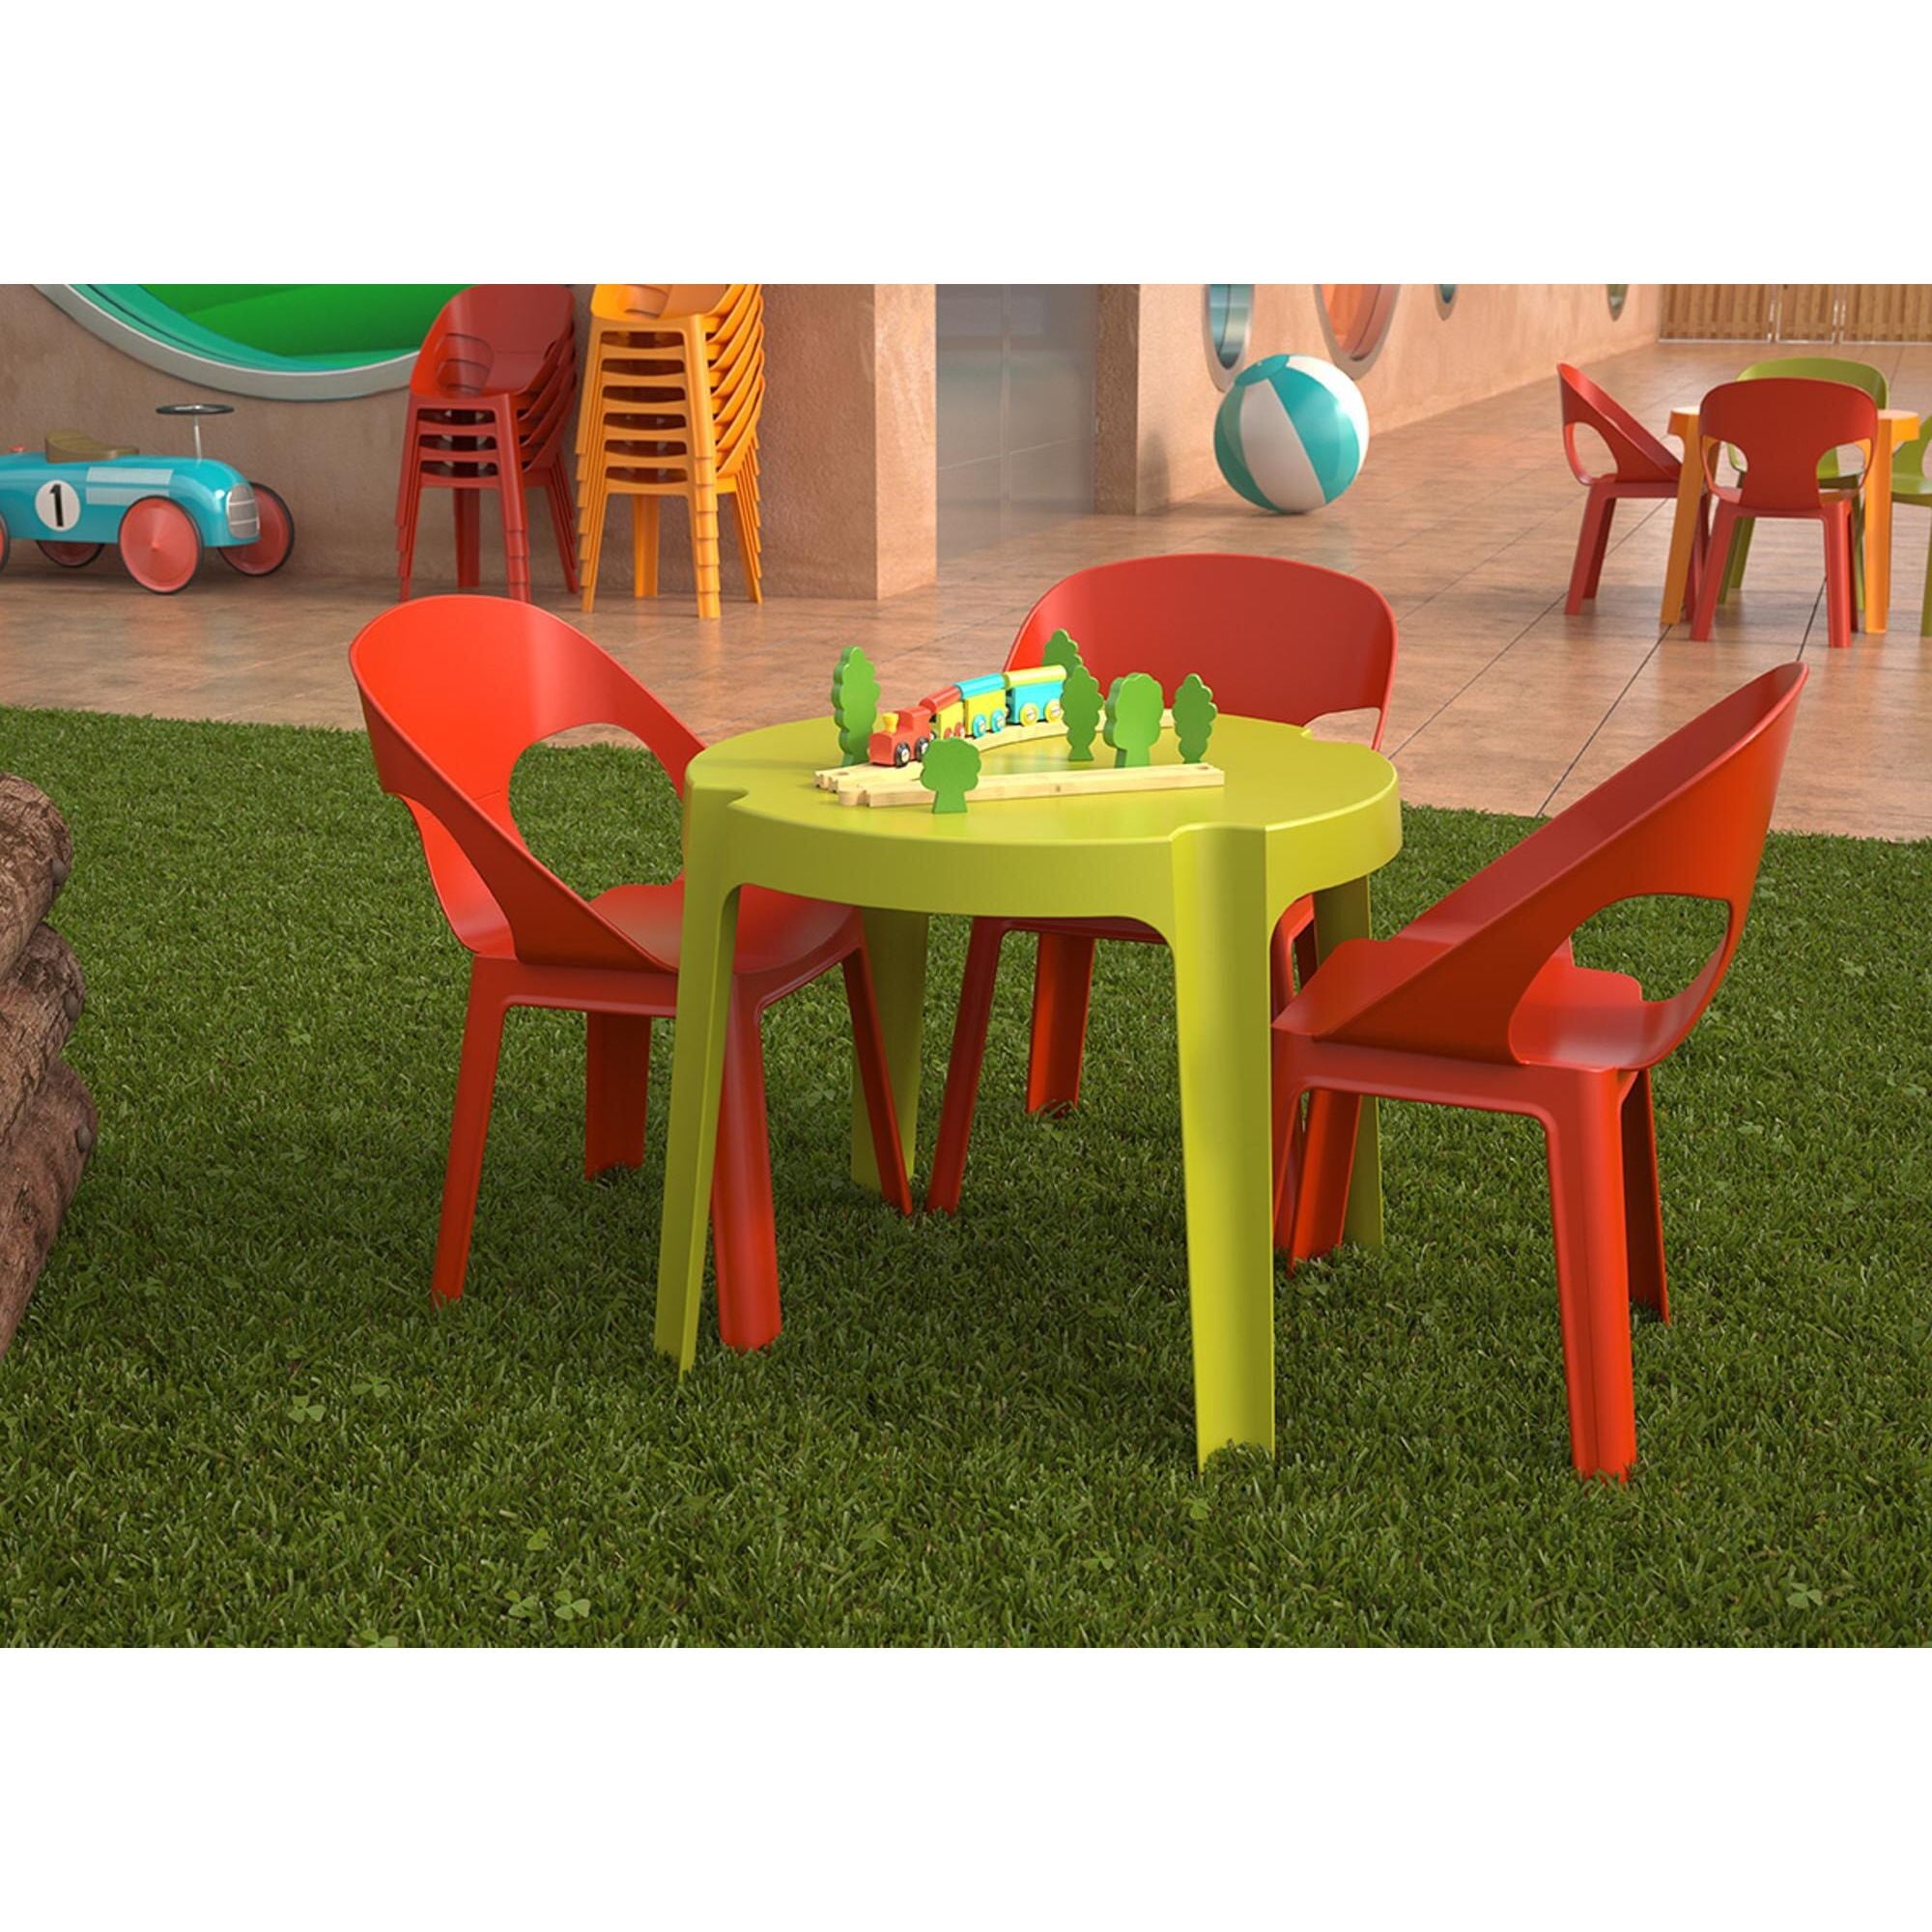 Garbar rita children's table indoors, outdoors 50x50 pink